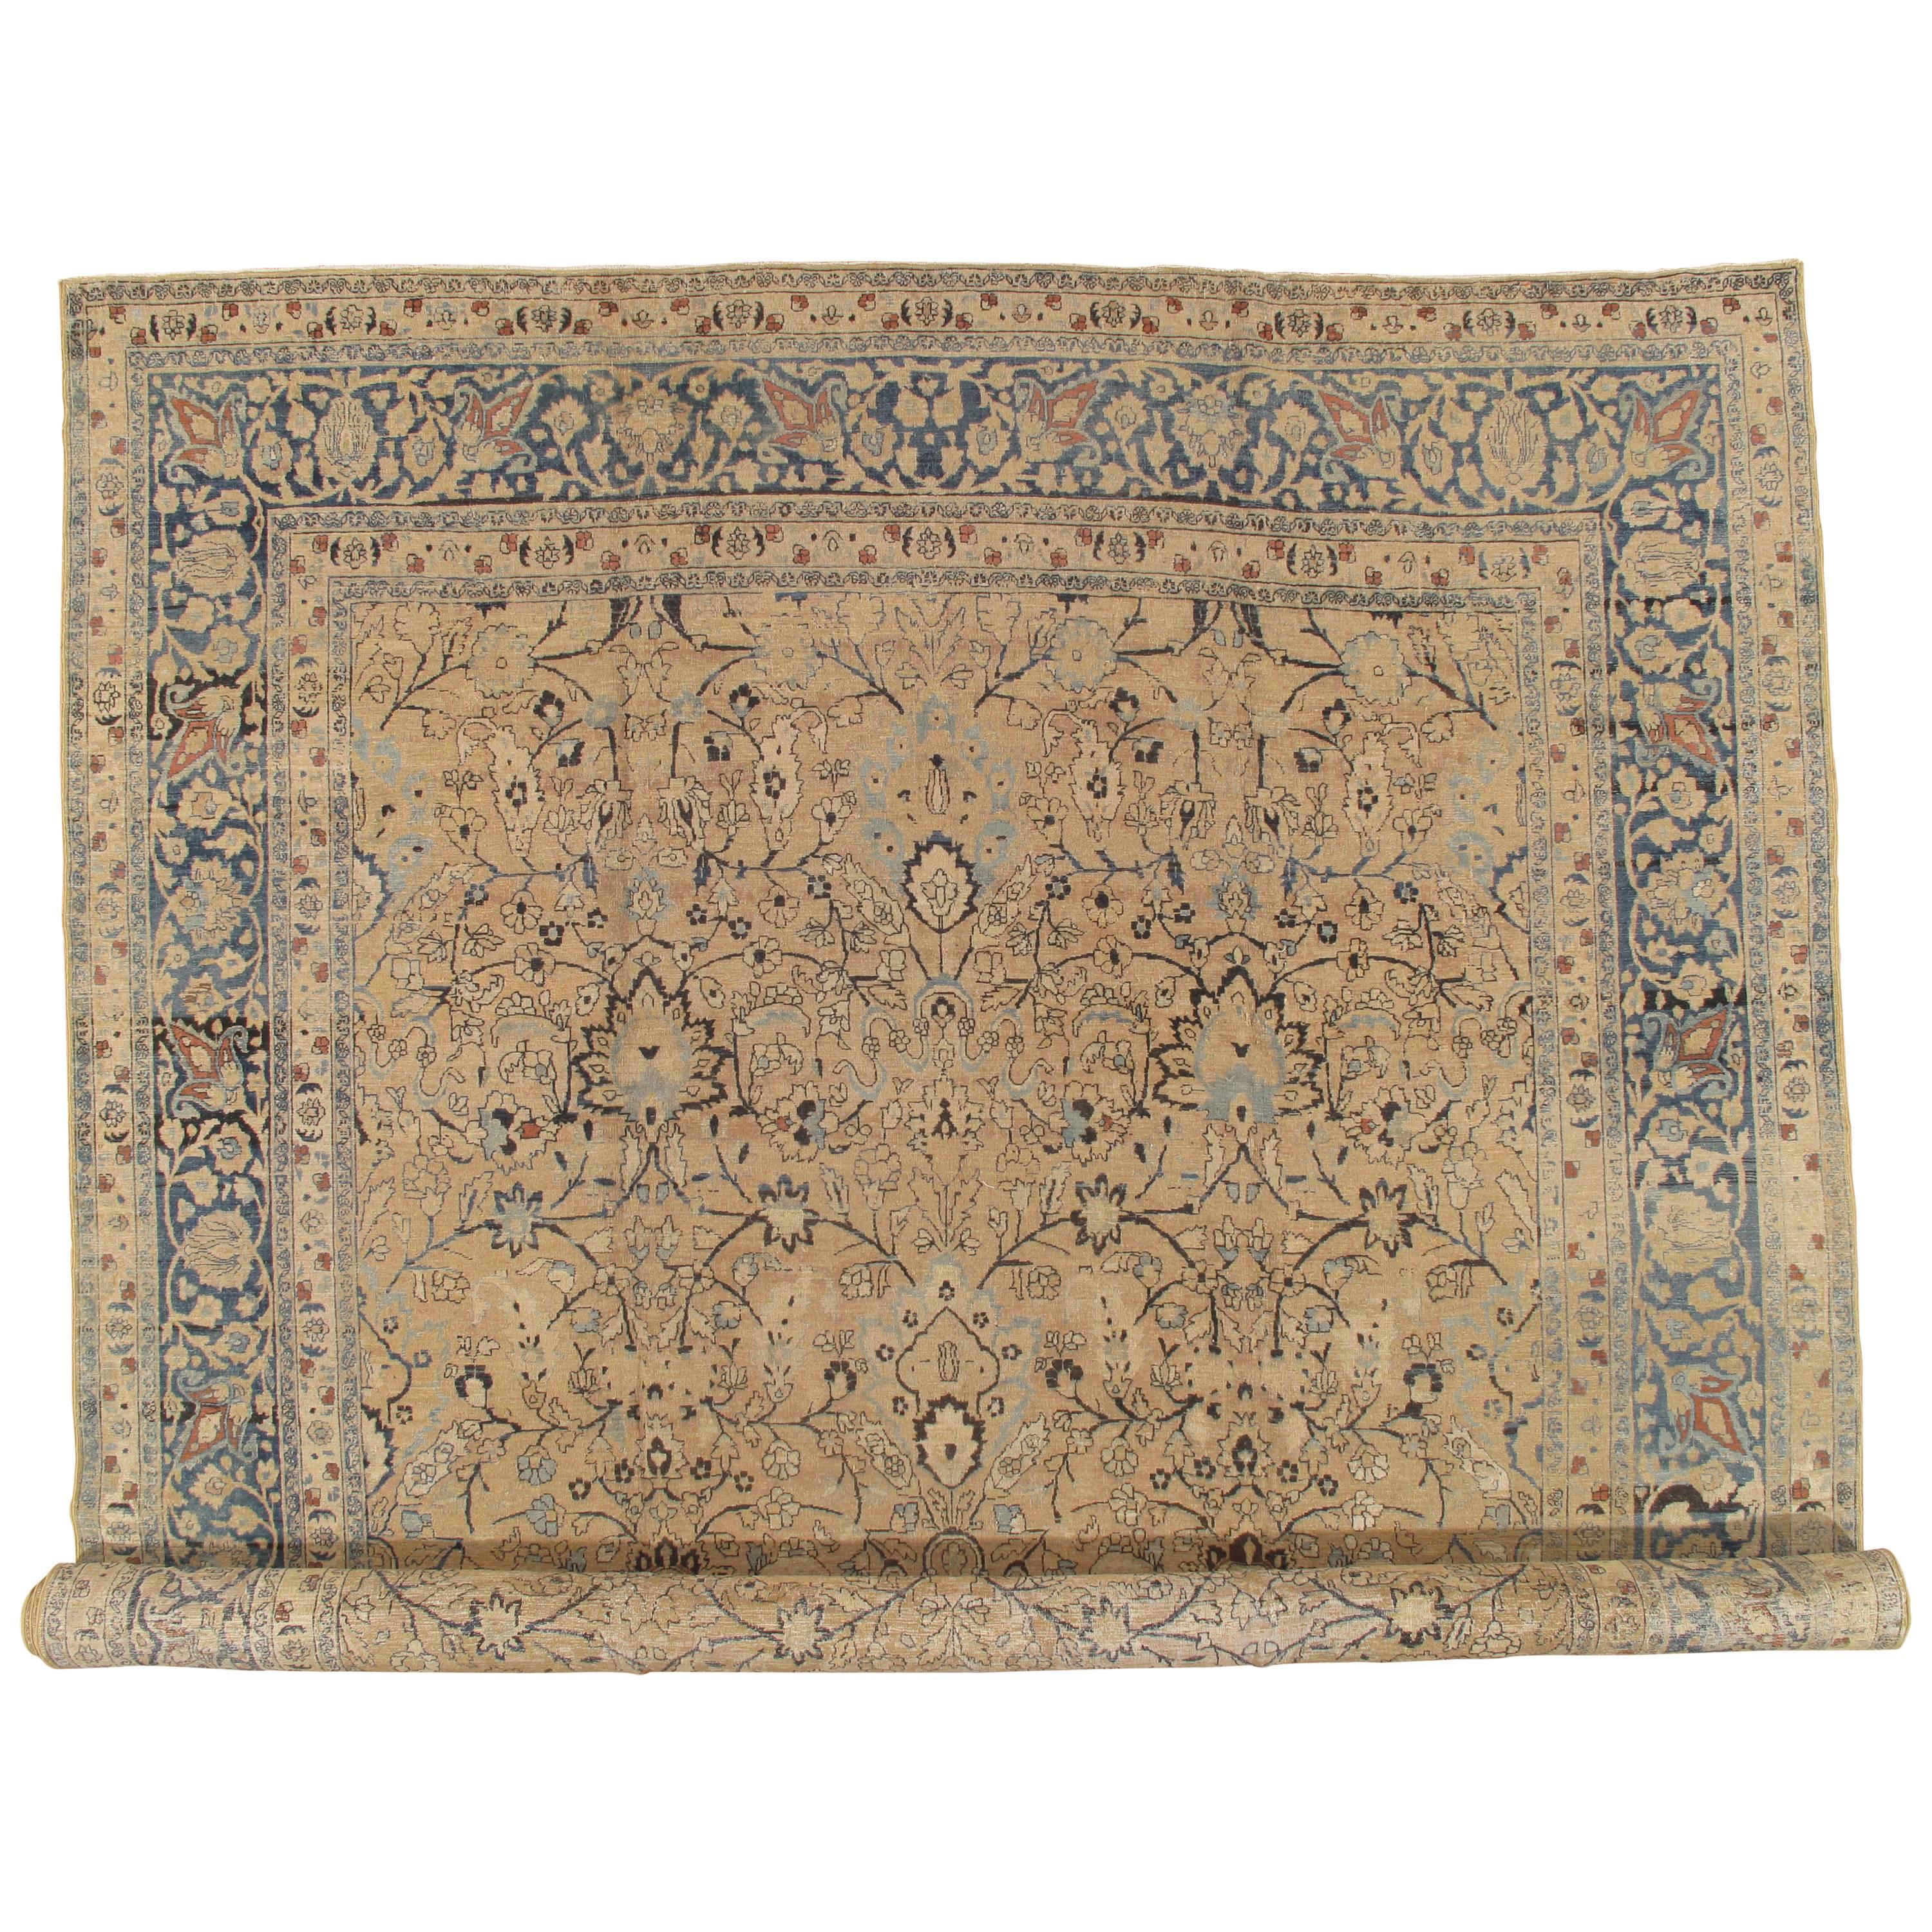 Antique Tabriz Fine Carpet, Handmade Persian Rug in Blue, Taupe, Soft Caramel For Sale